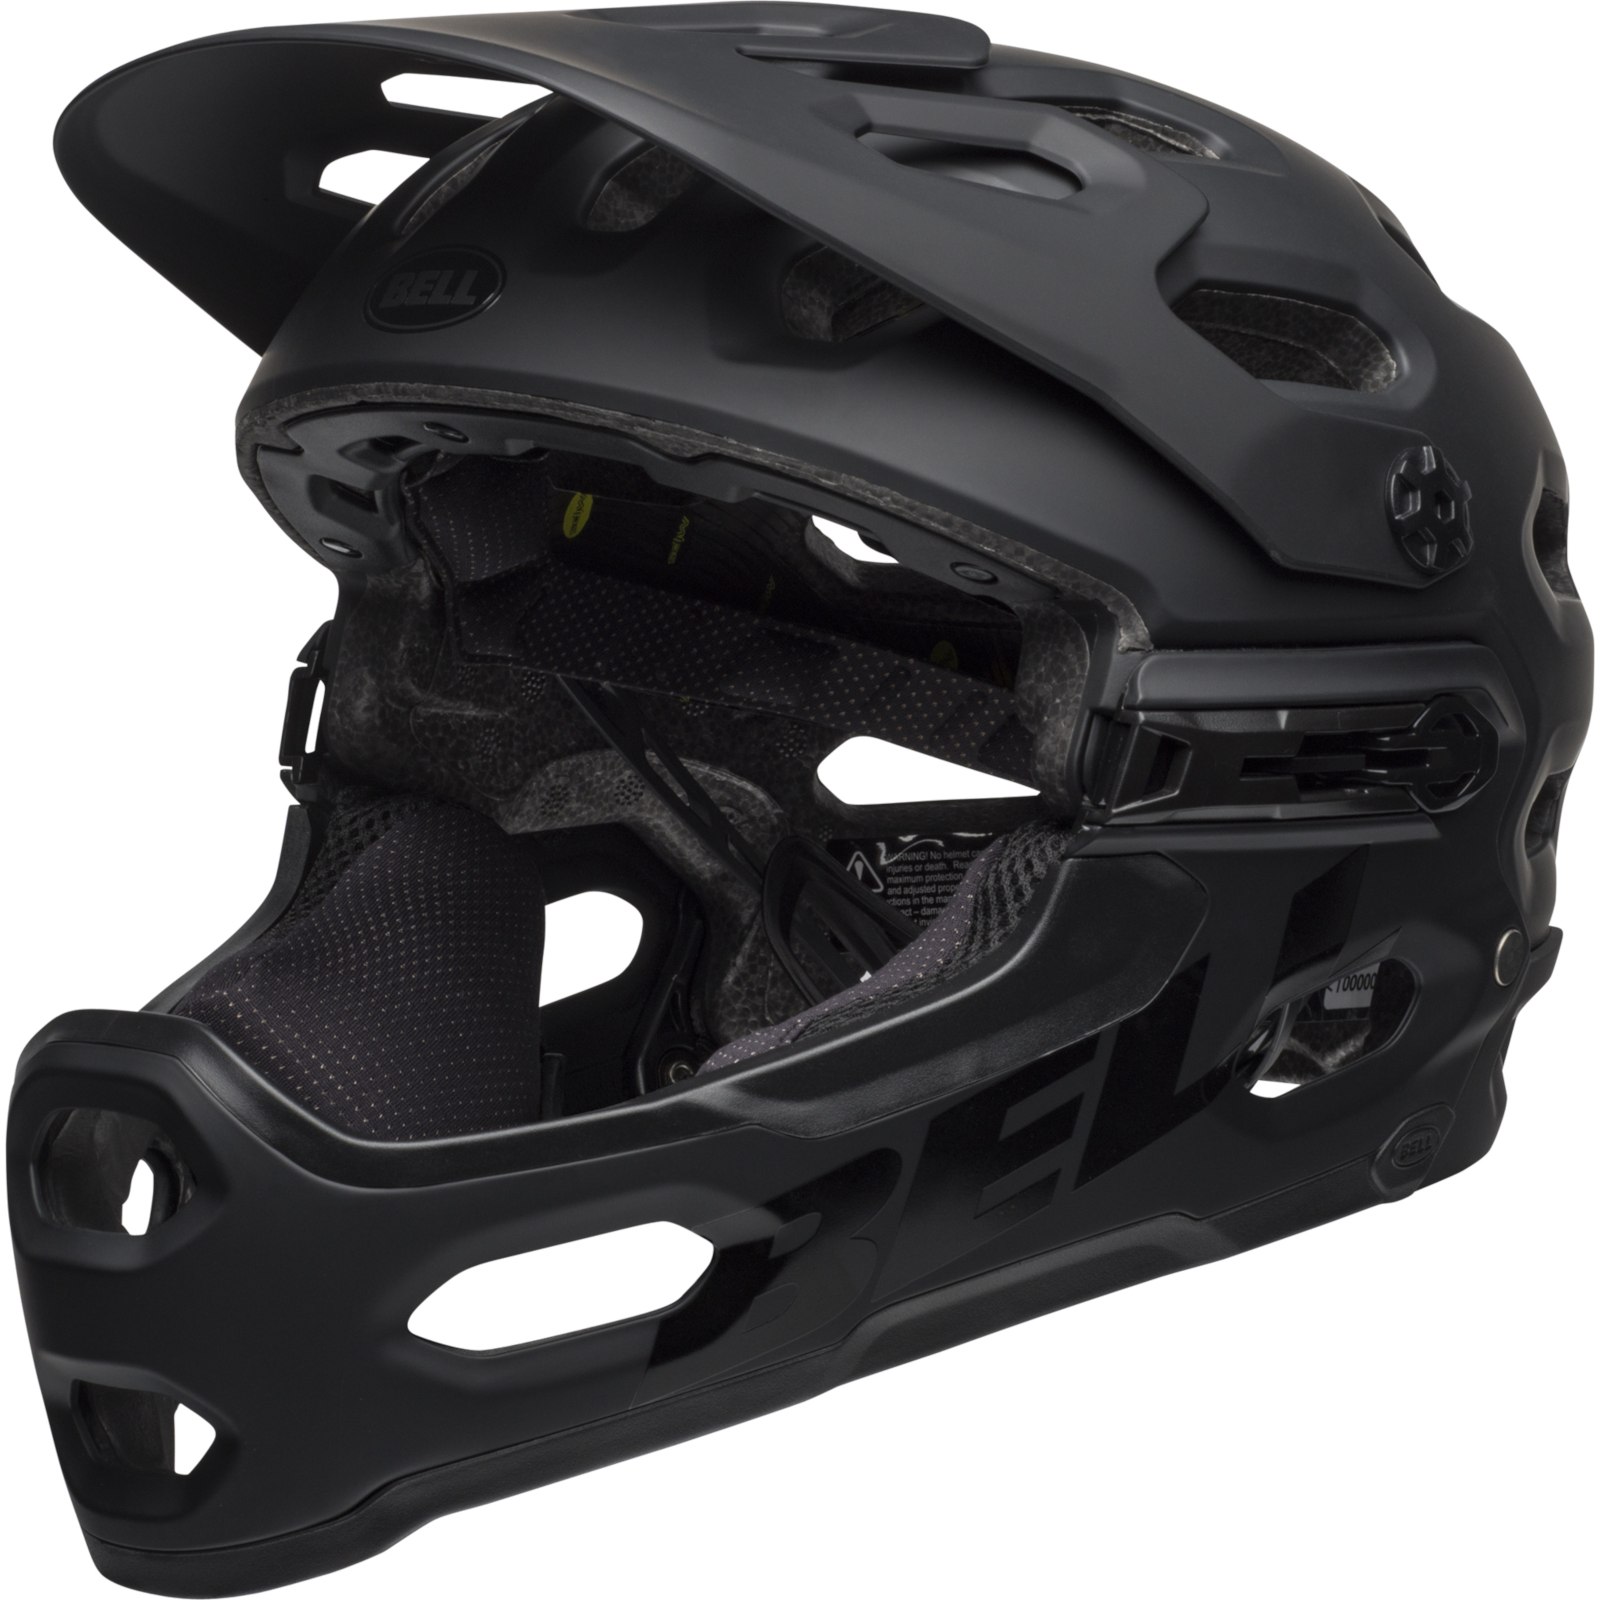 Picture of Bell Super 3R MIPS Helmet - matte black/gray